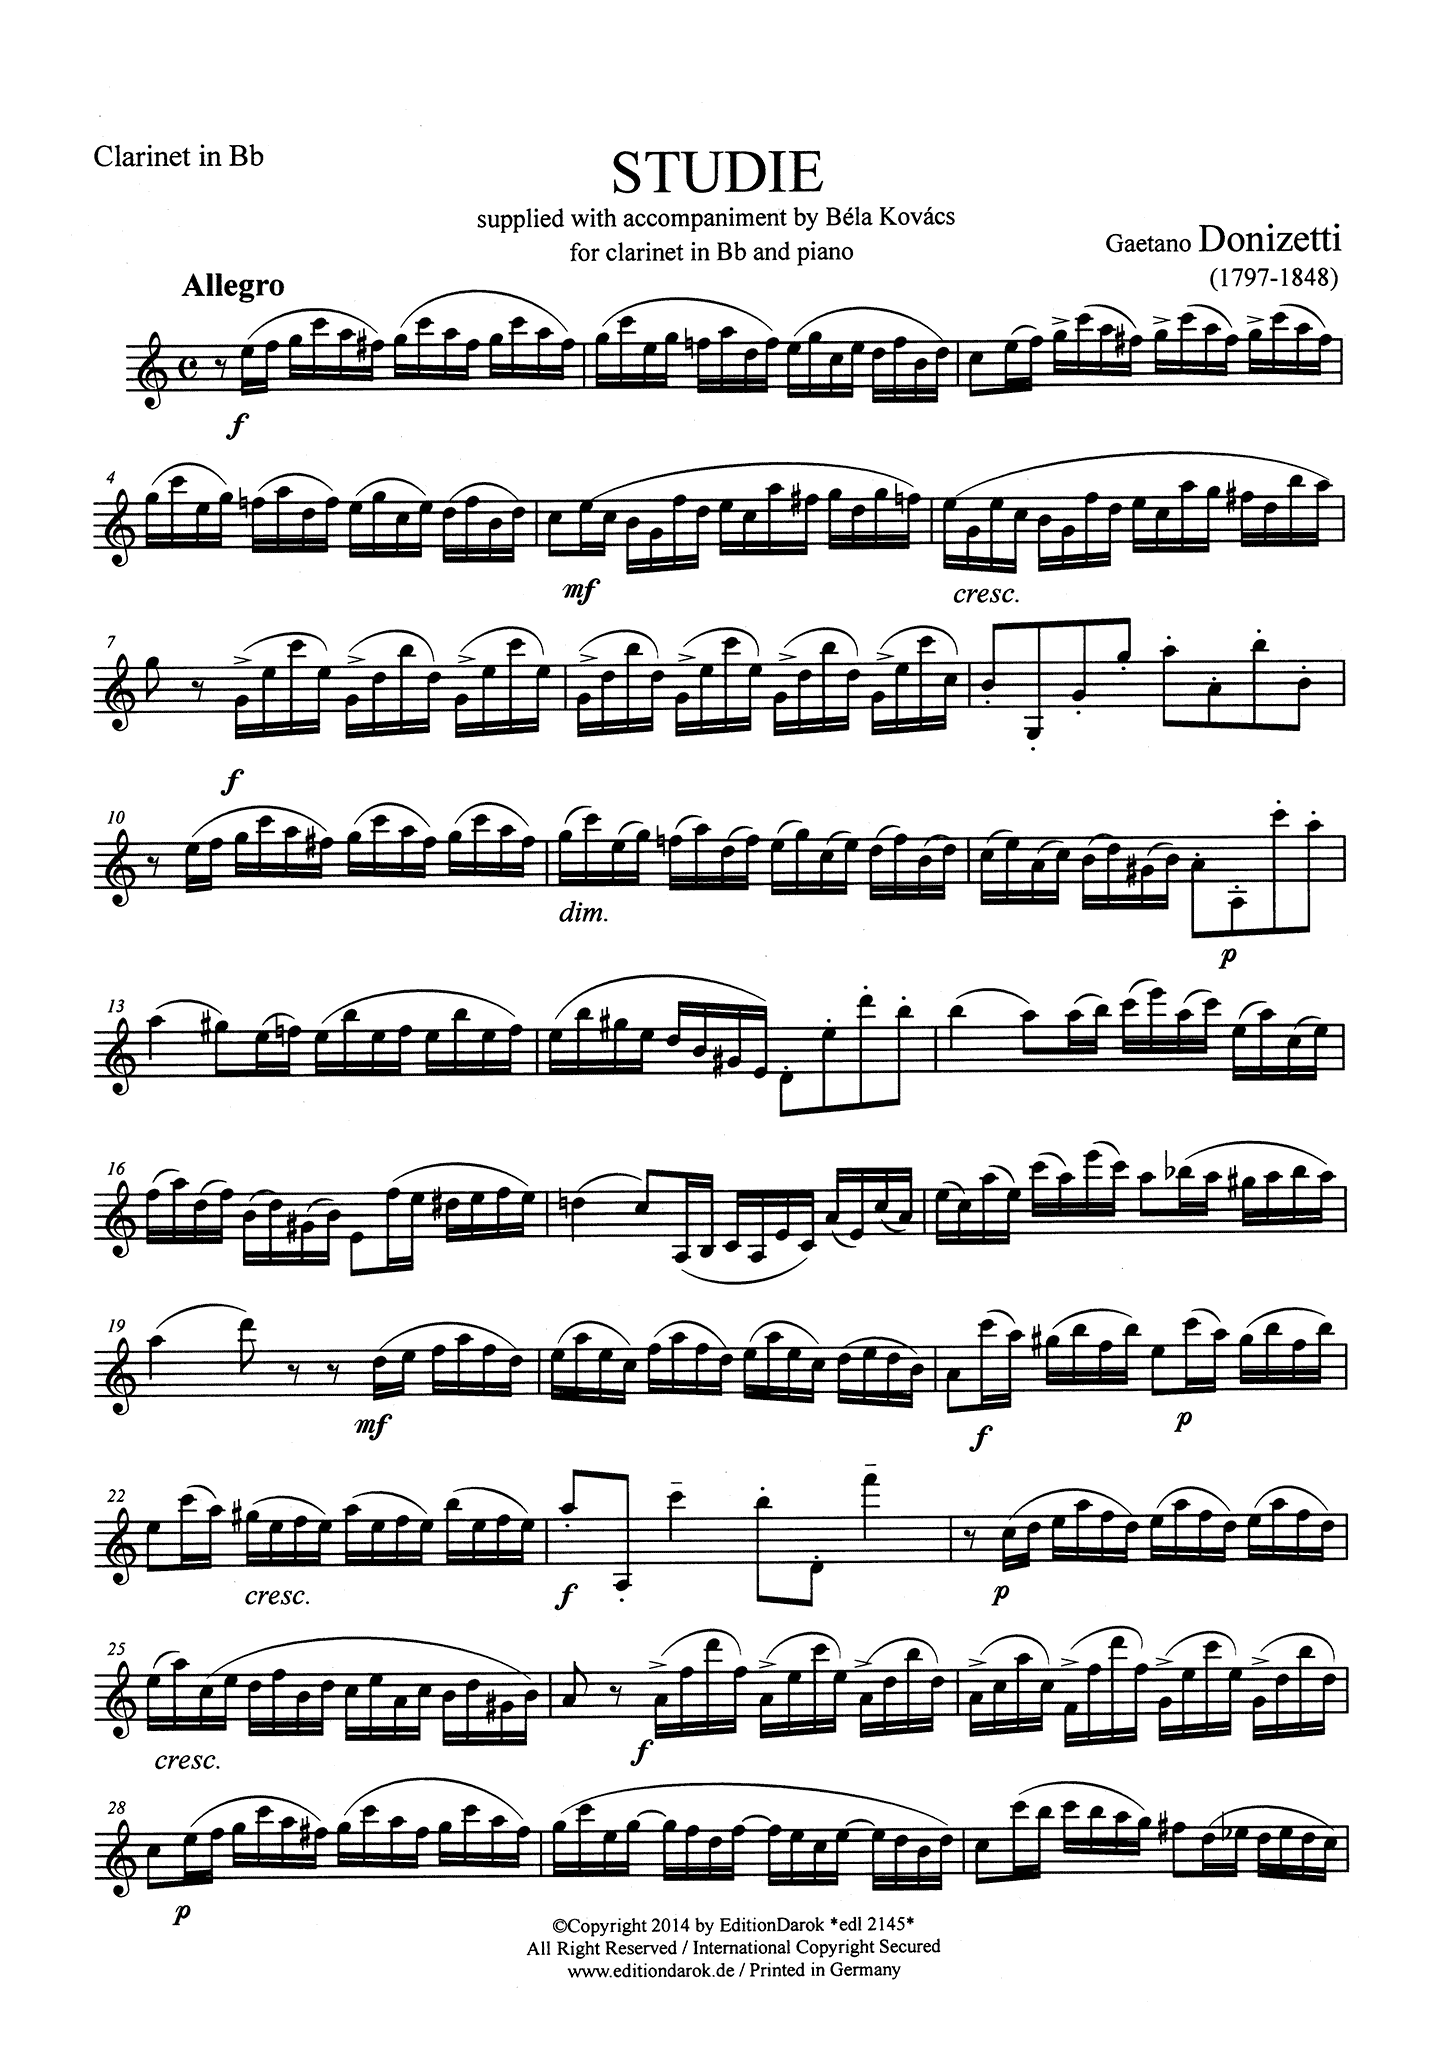 Donizetti Study No. 1 with piano accompaniment Clarinet part